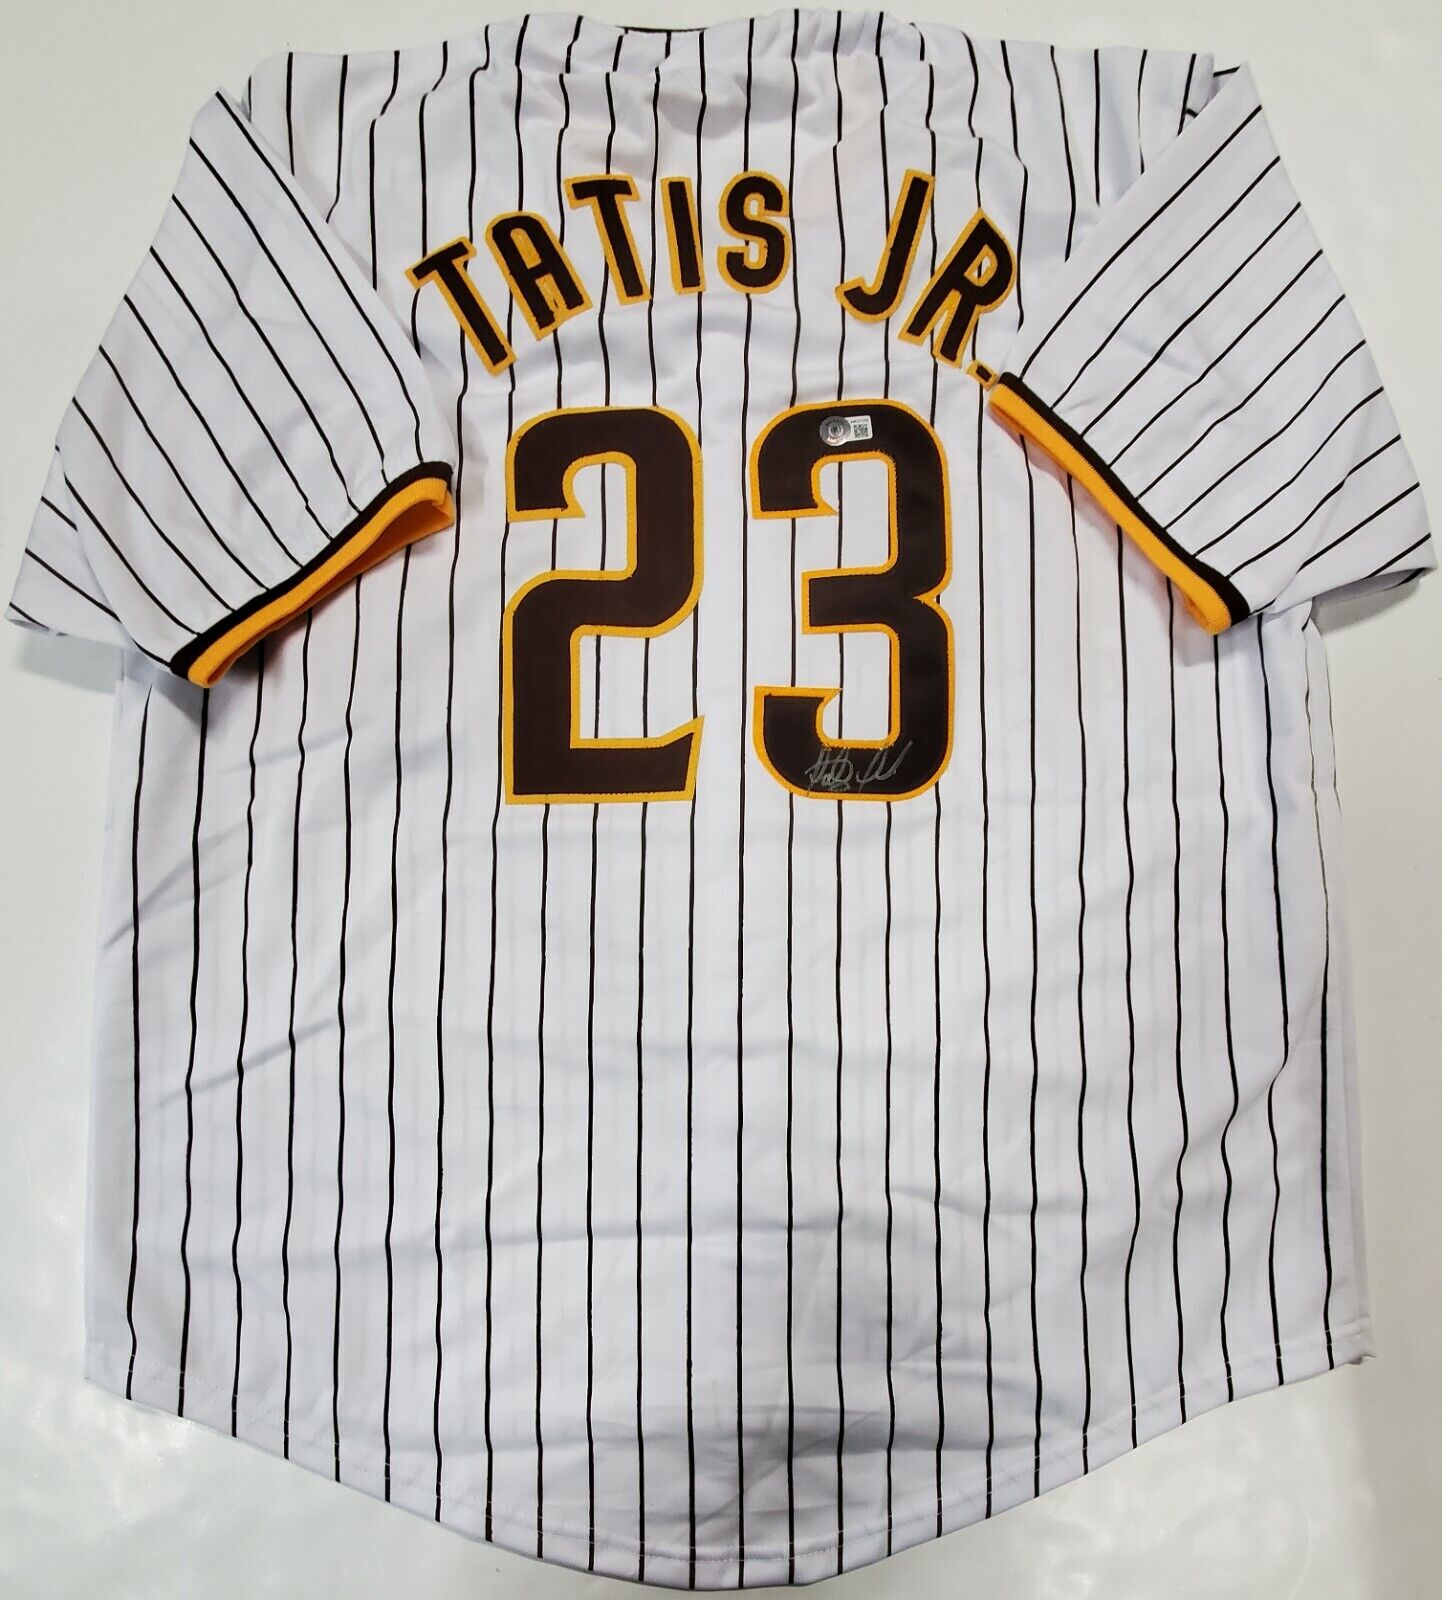 Fernando Tatis Jr Autographed San Diego Padres Majestic Baseball Jersey -  BAS COA